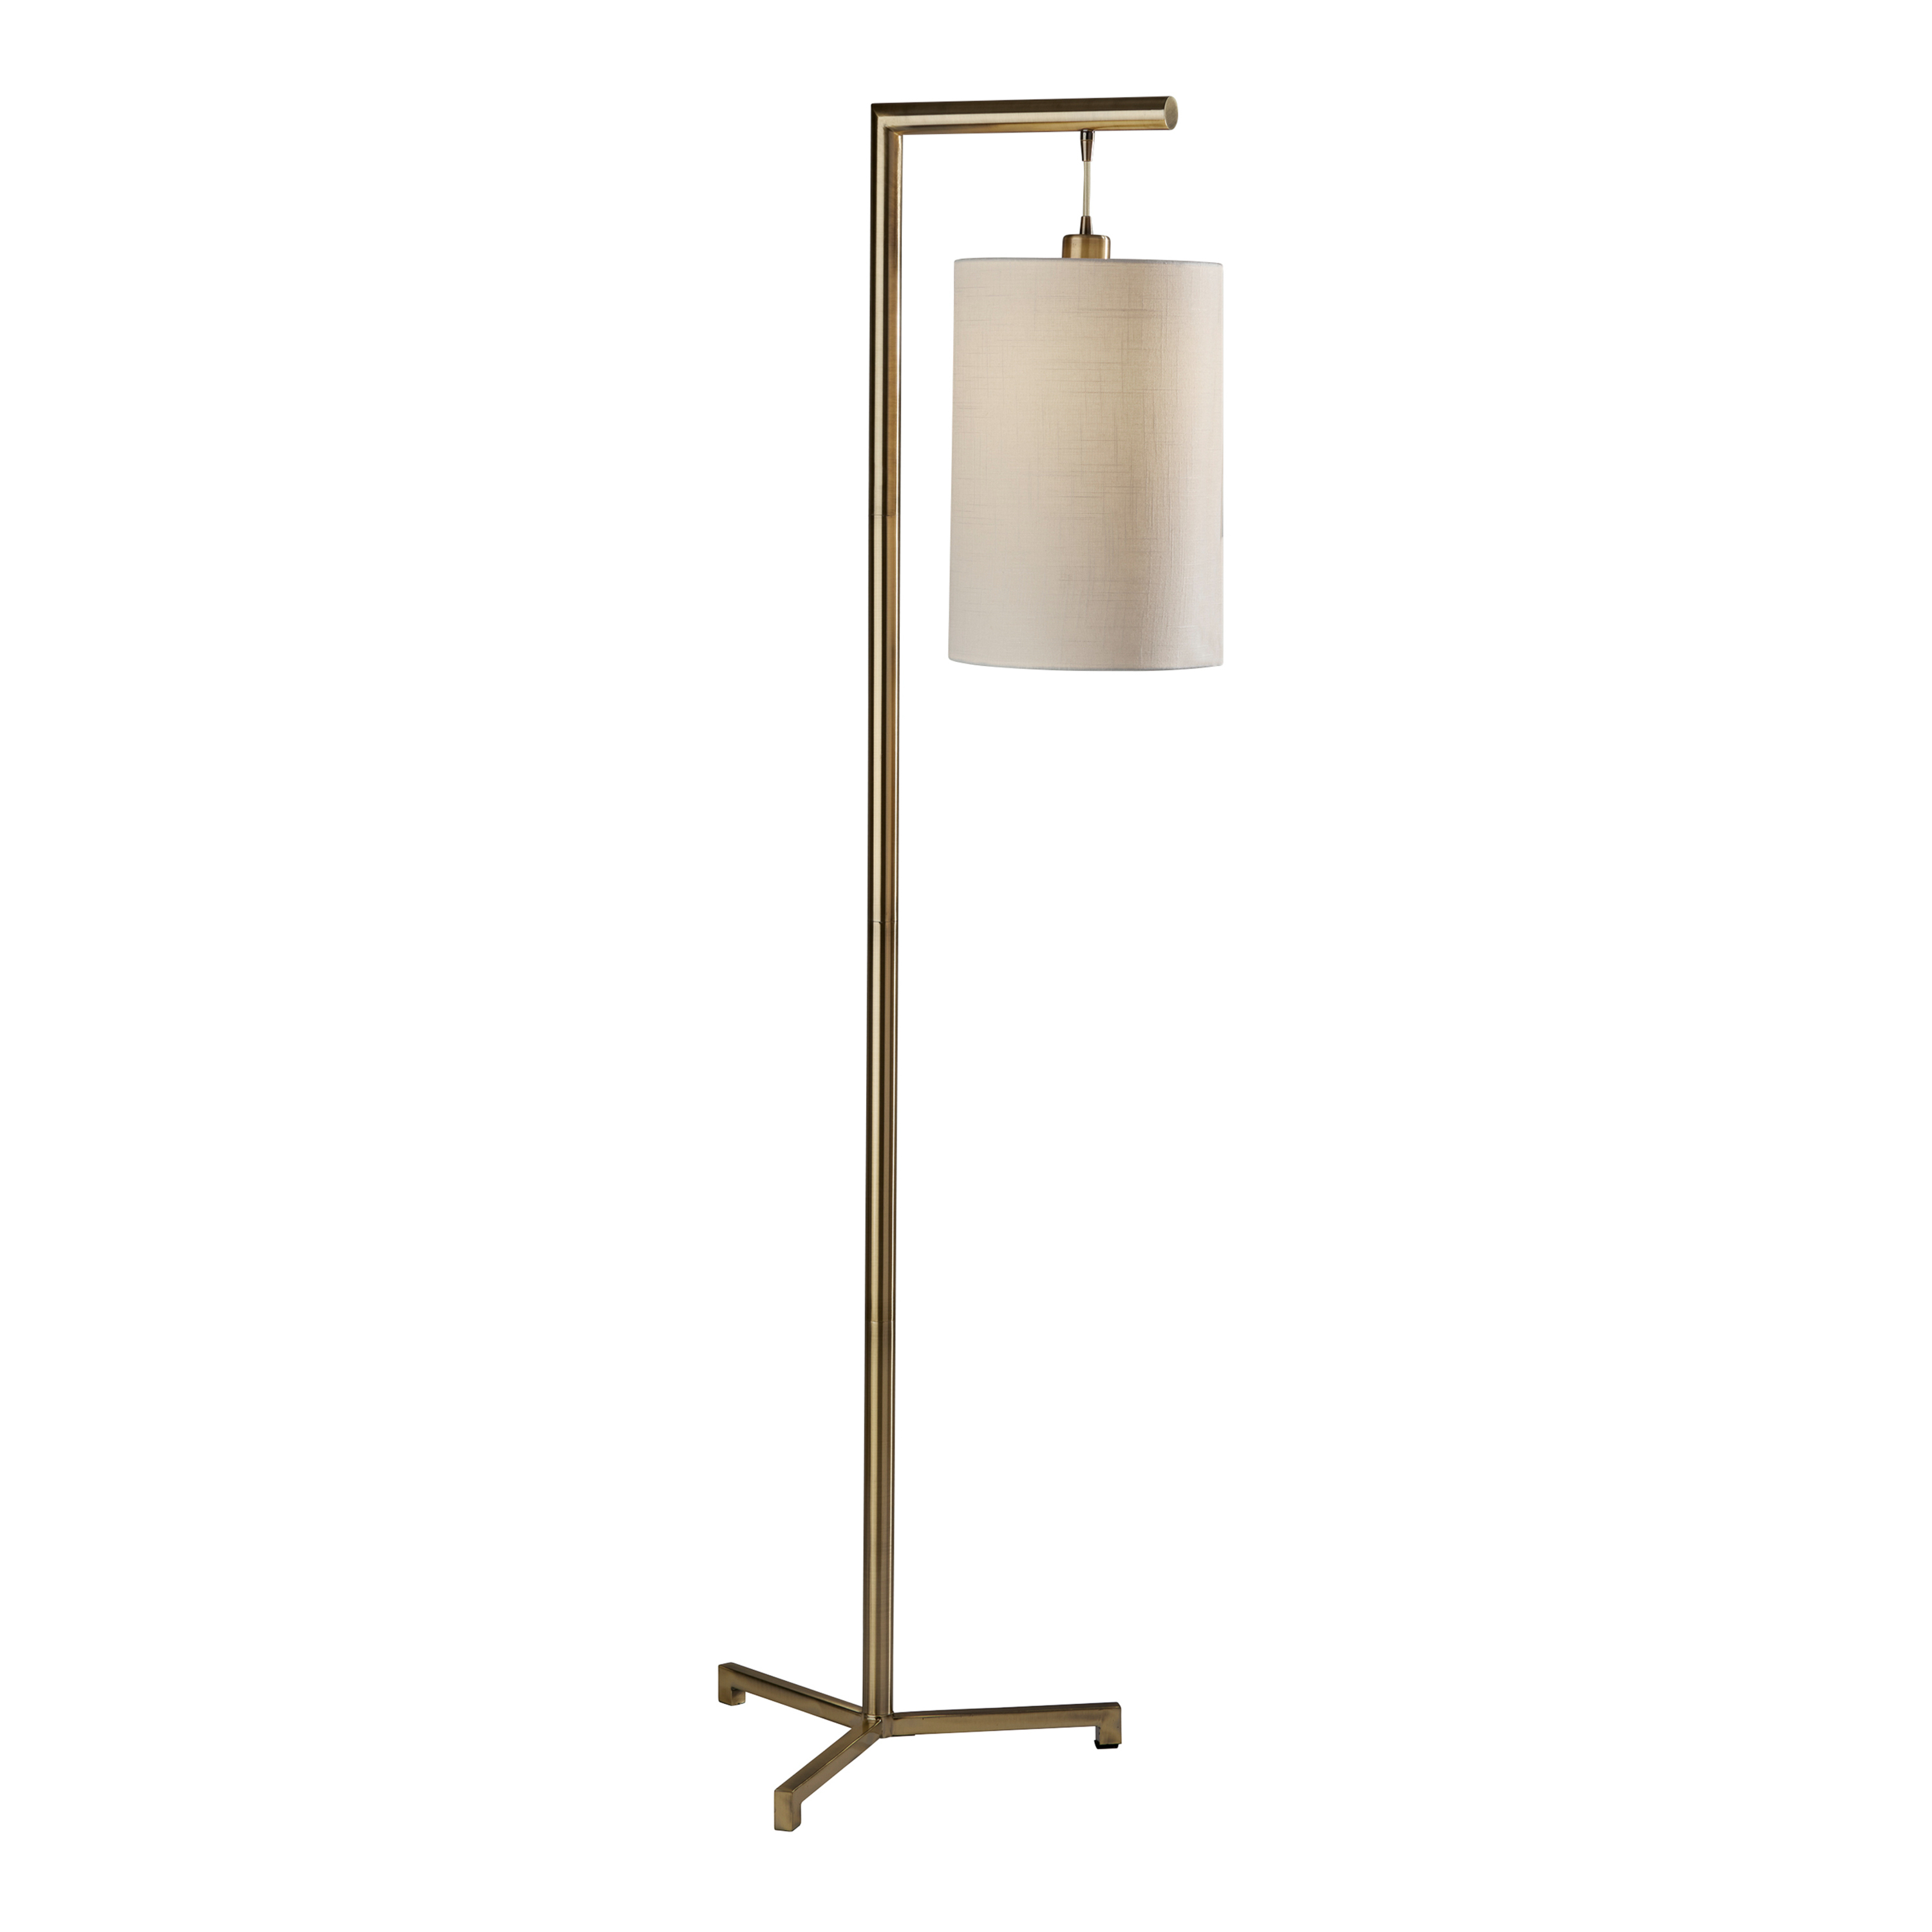 Yves Antique Brass Hanging Shade Floor Lamp - World Market